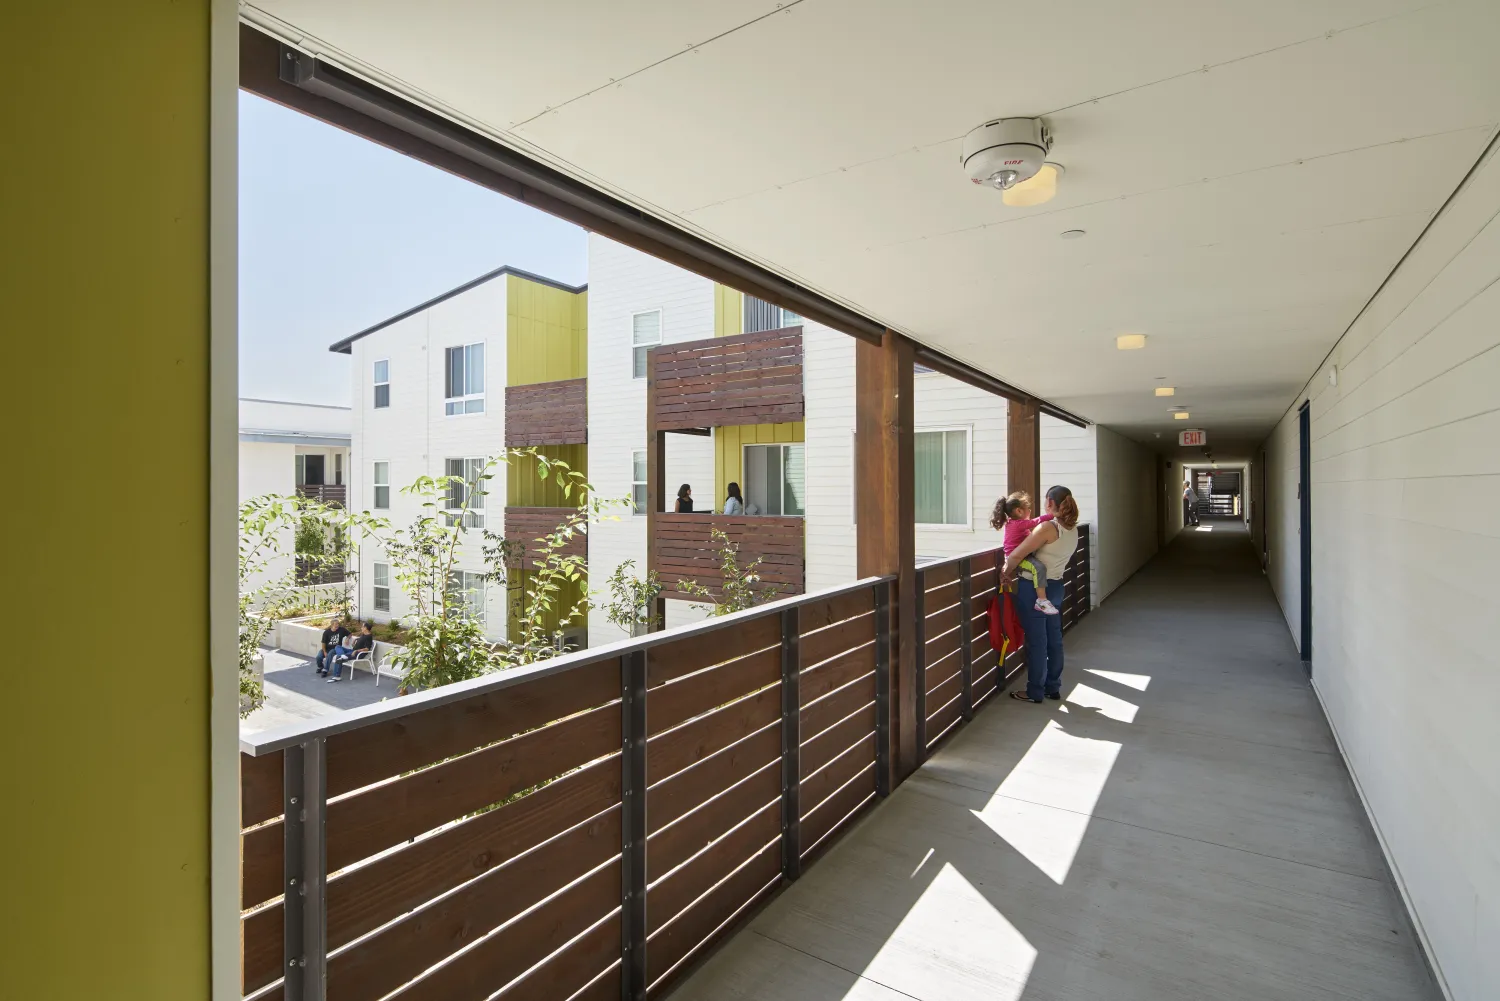 Open-air corridors in Onizuka Crossing Family Housing in Sunnyvale, California.